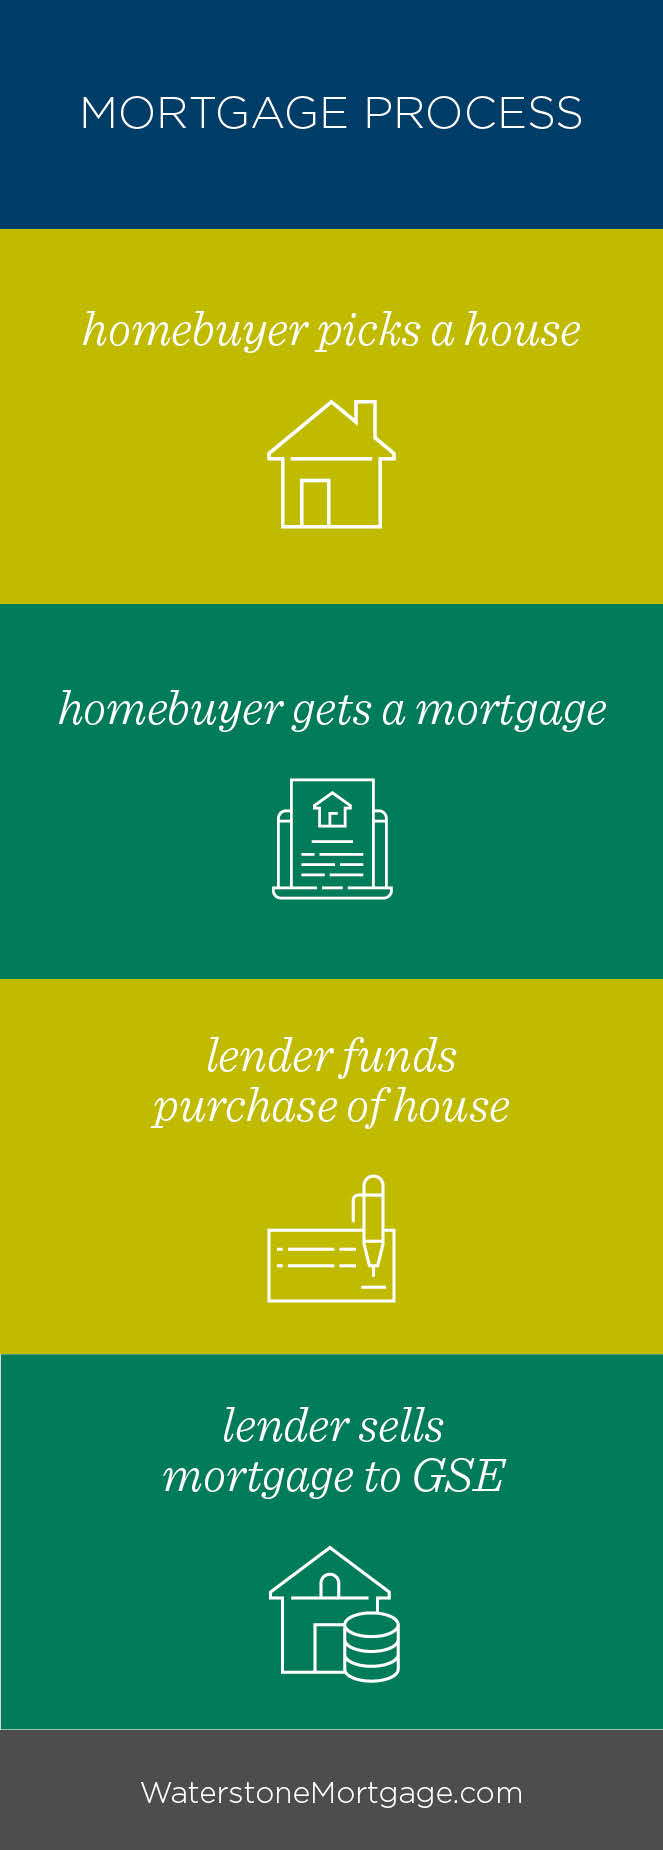 home-mortgage-loan-process